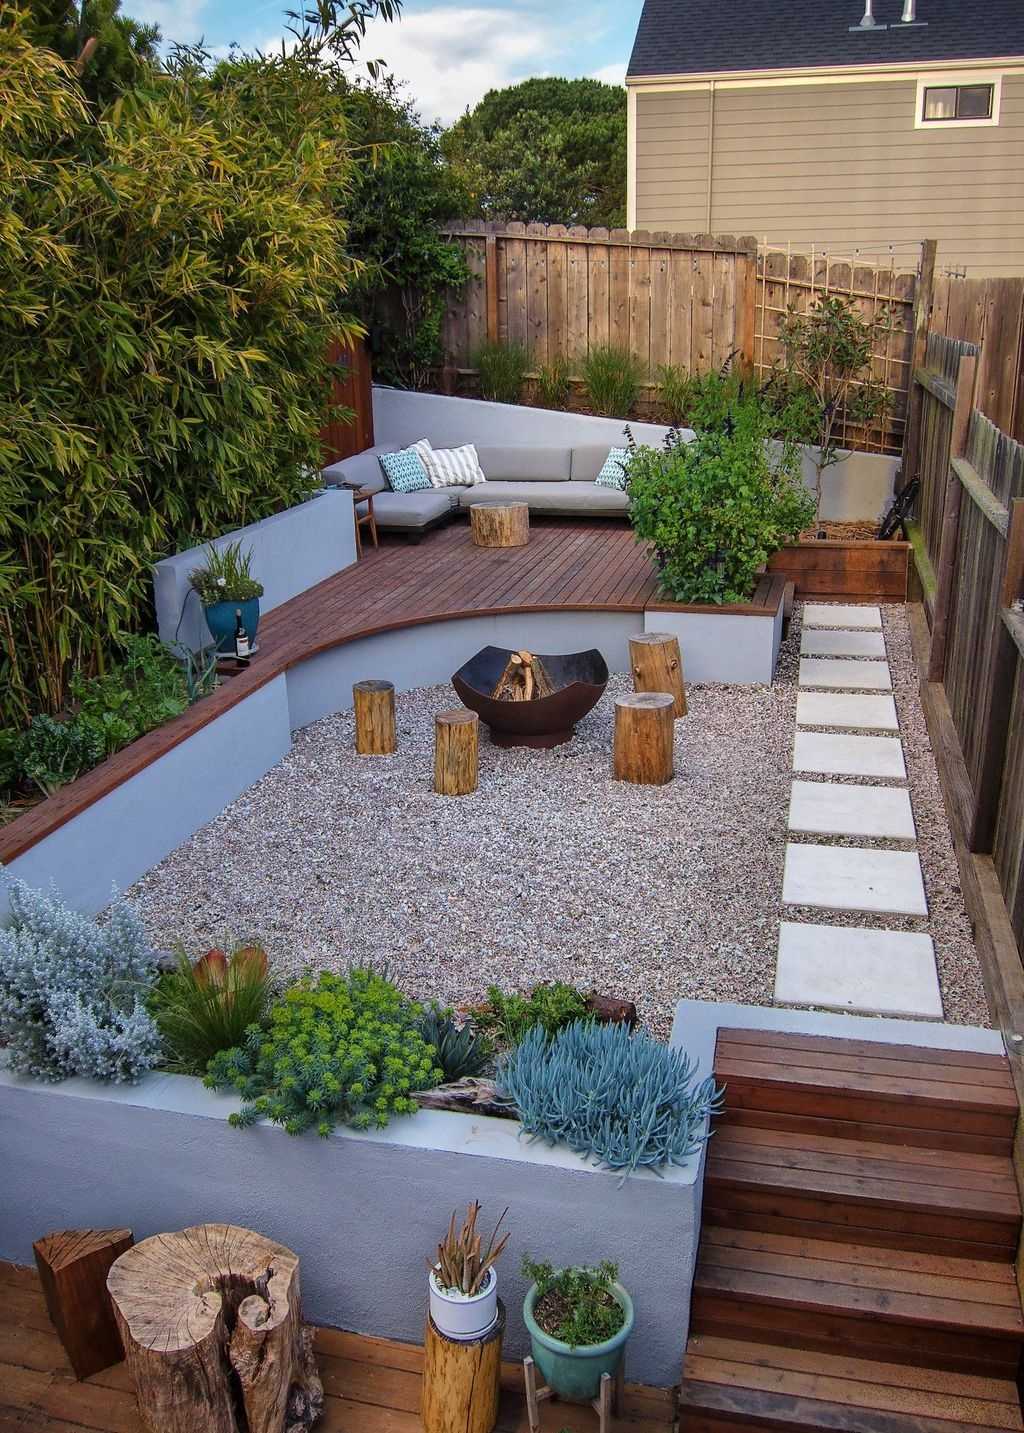 30 Perfect Small Backyard & Garden Design Ideas - Page 21 of 30